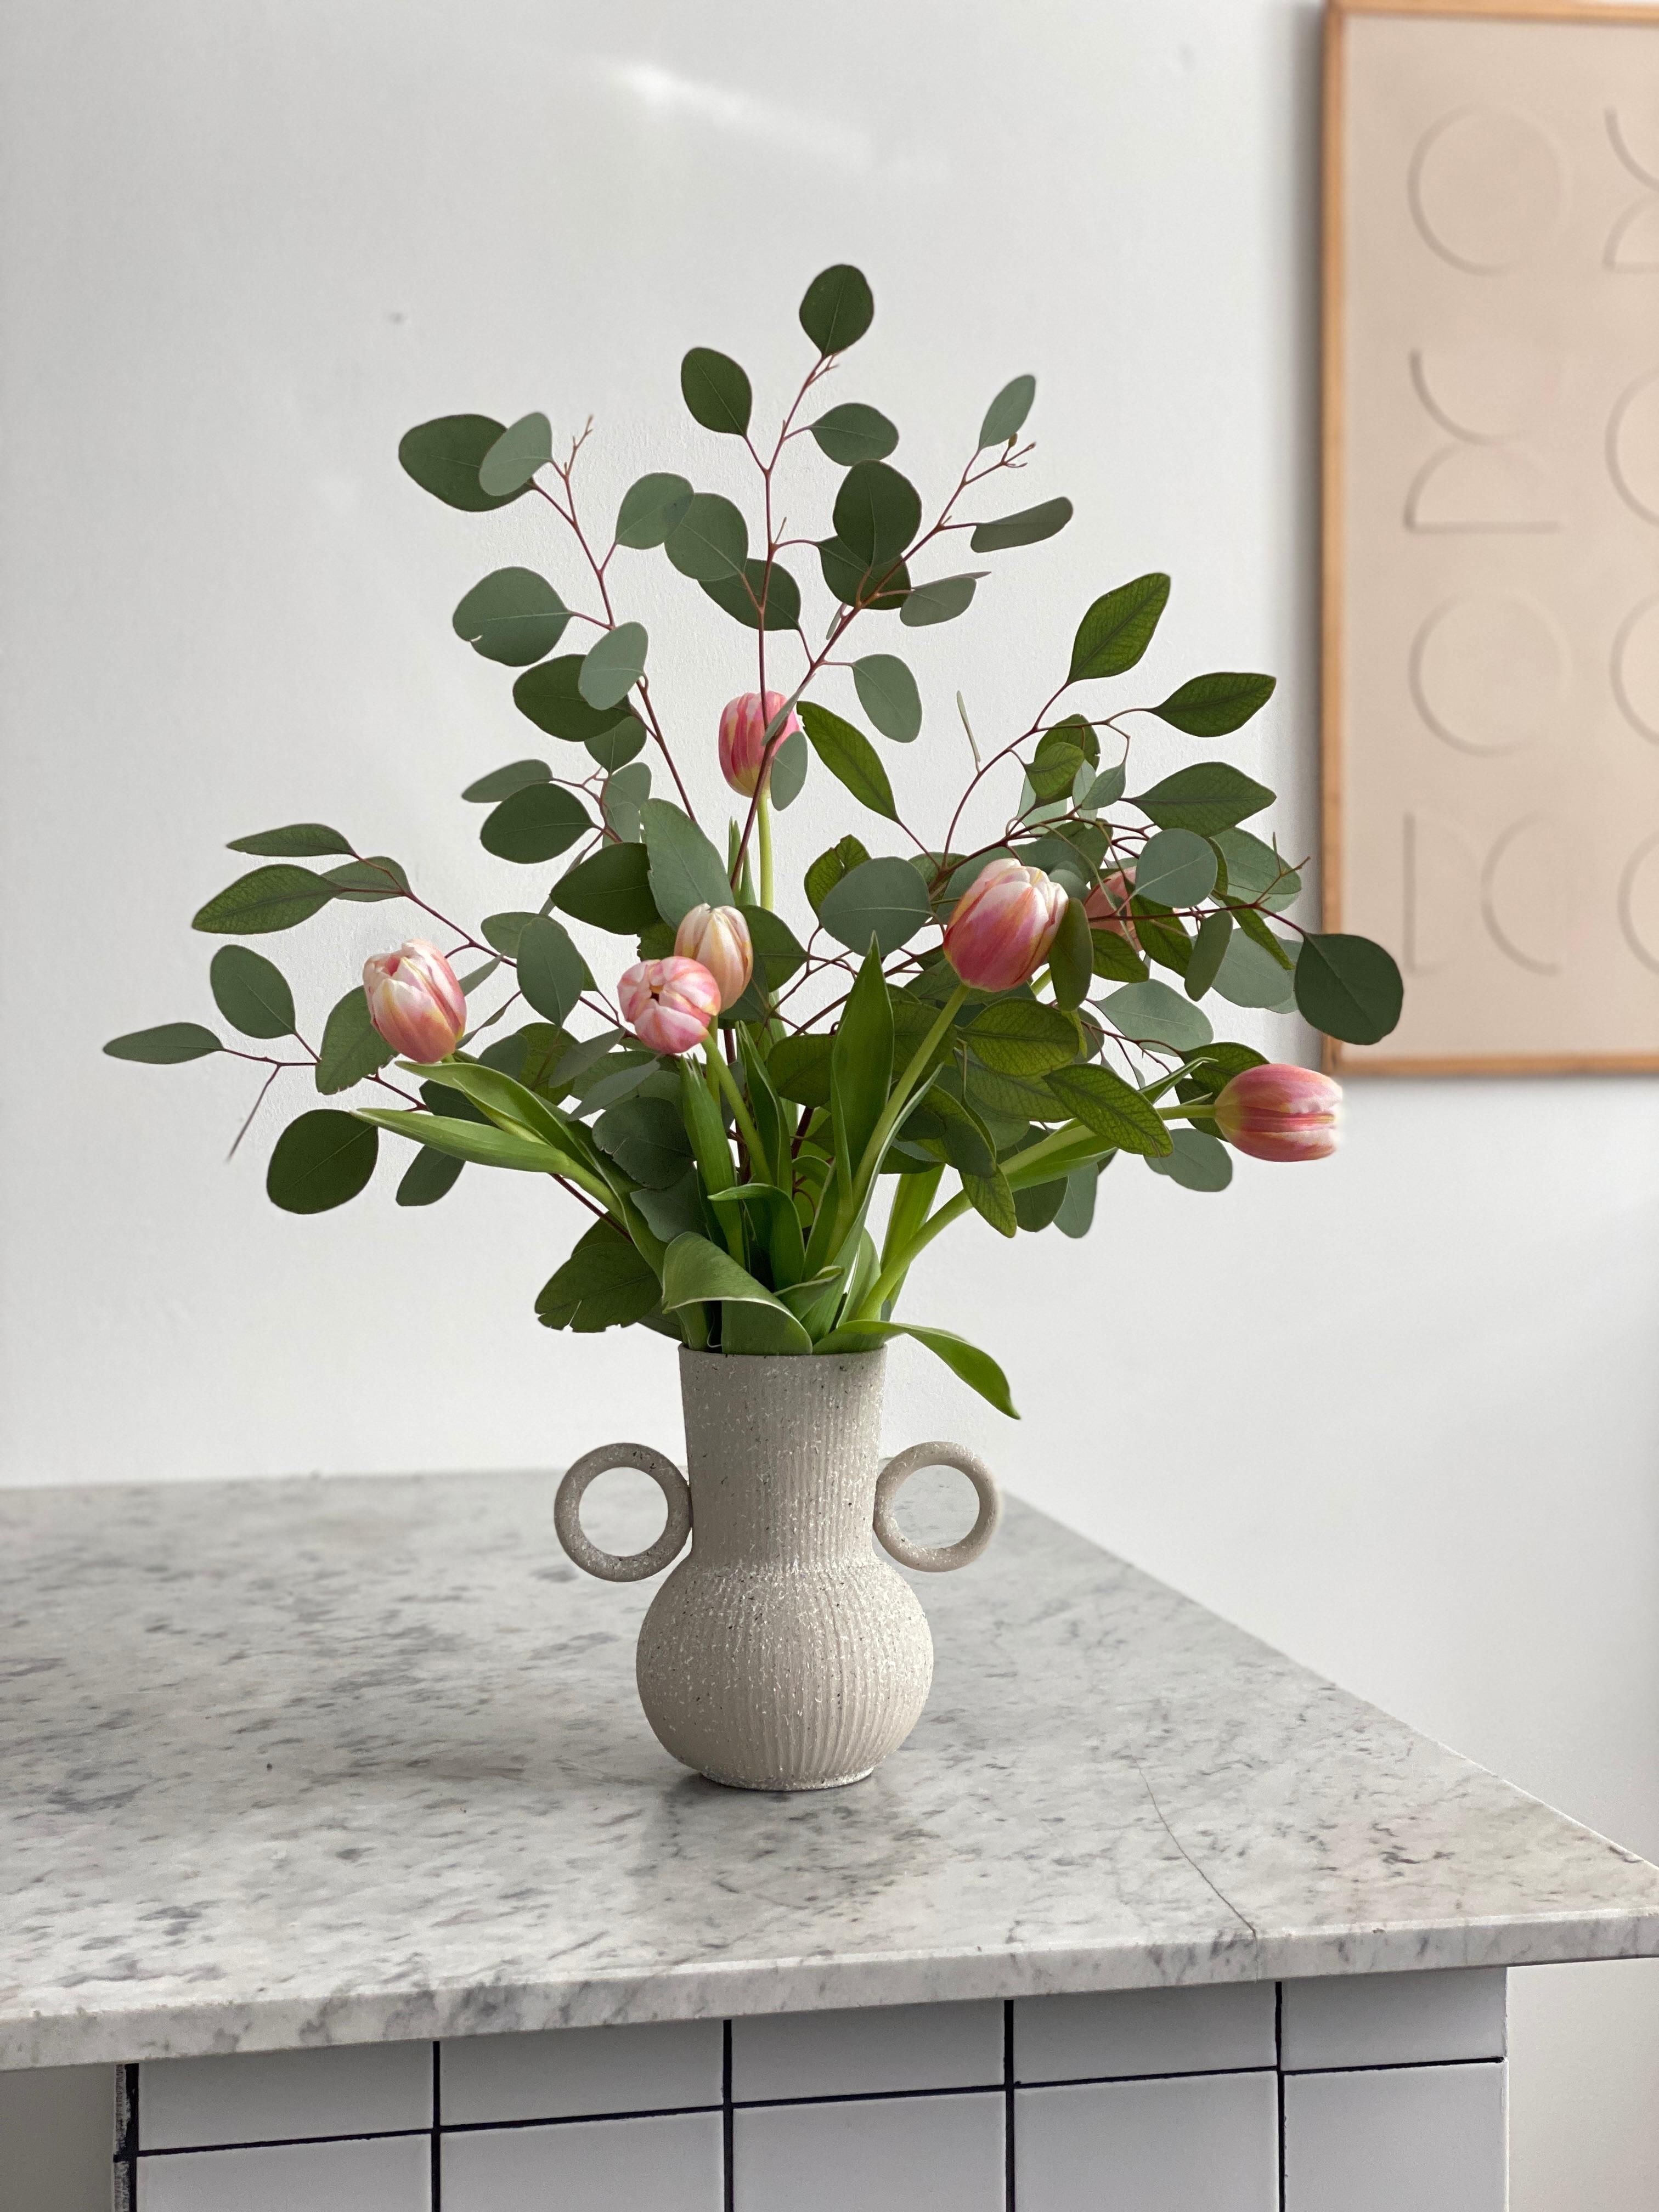 Ikea Hack DIY Vase 🌷🌷🌷🌿 #diy #ikea #vase #ikeahack #inspiration #sophiagaleria #anleitungaufmeinemblog